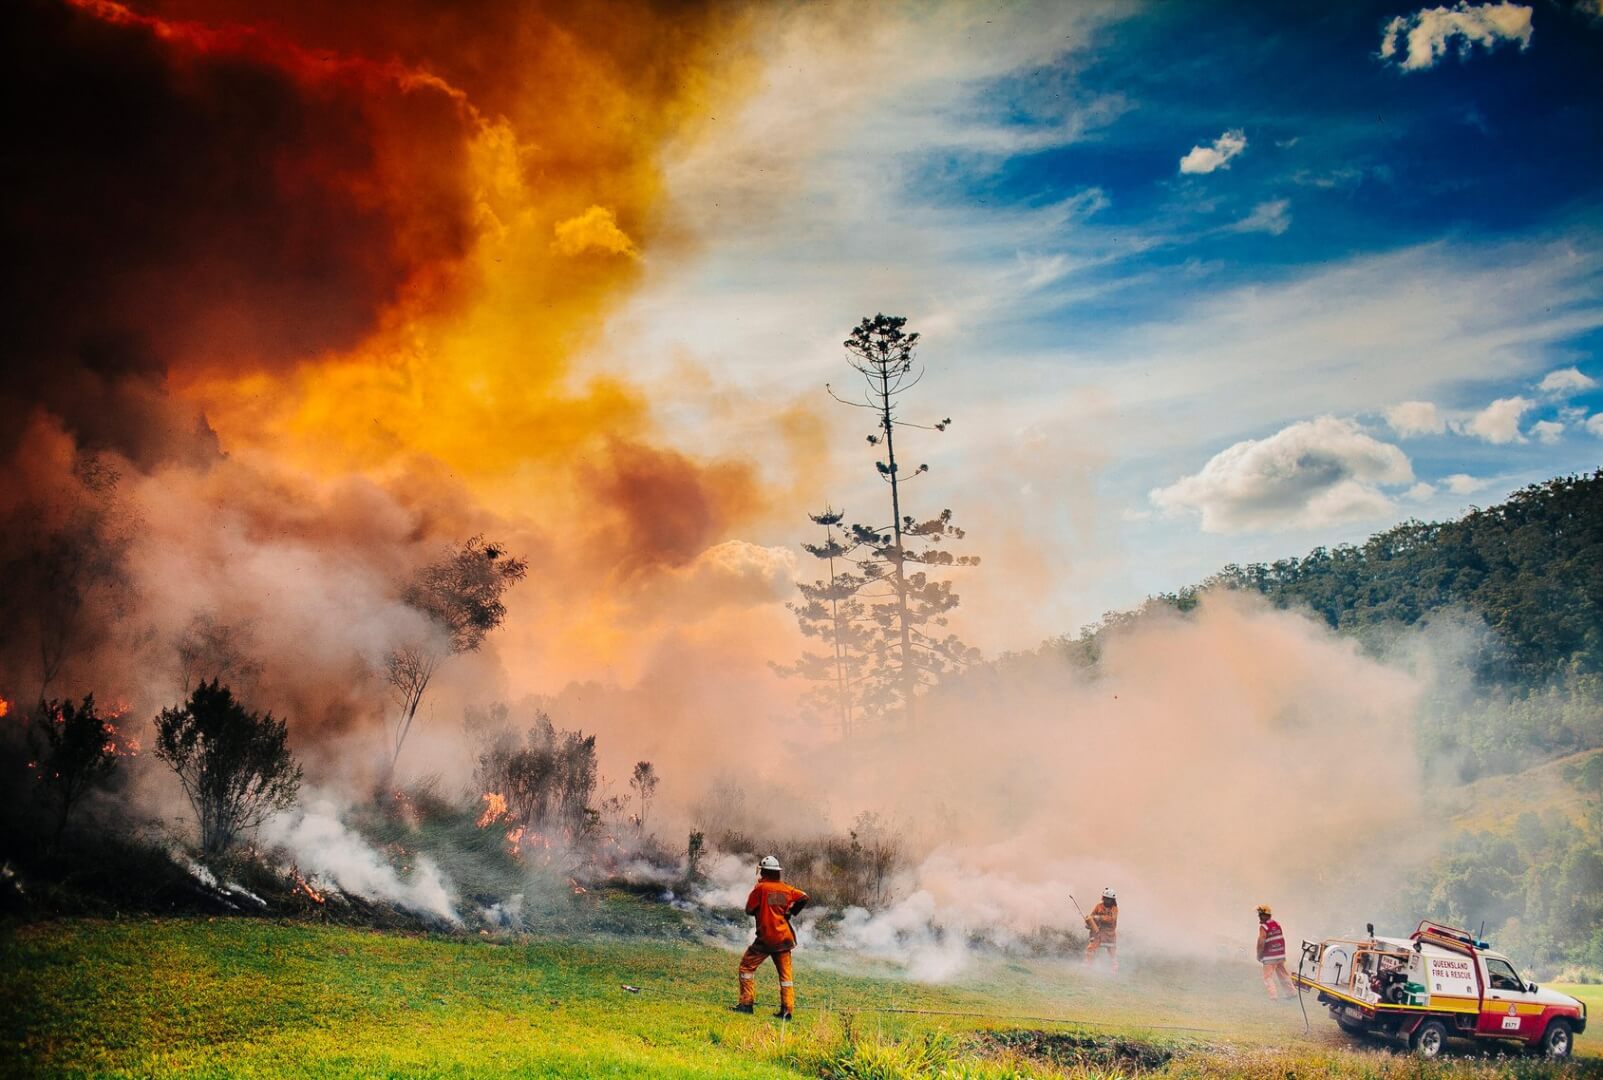 Stock photo of Firefighters conducting a hazard mitigation burn near Mount Tamborine, Queensland, Australia.